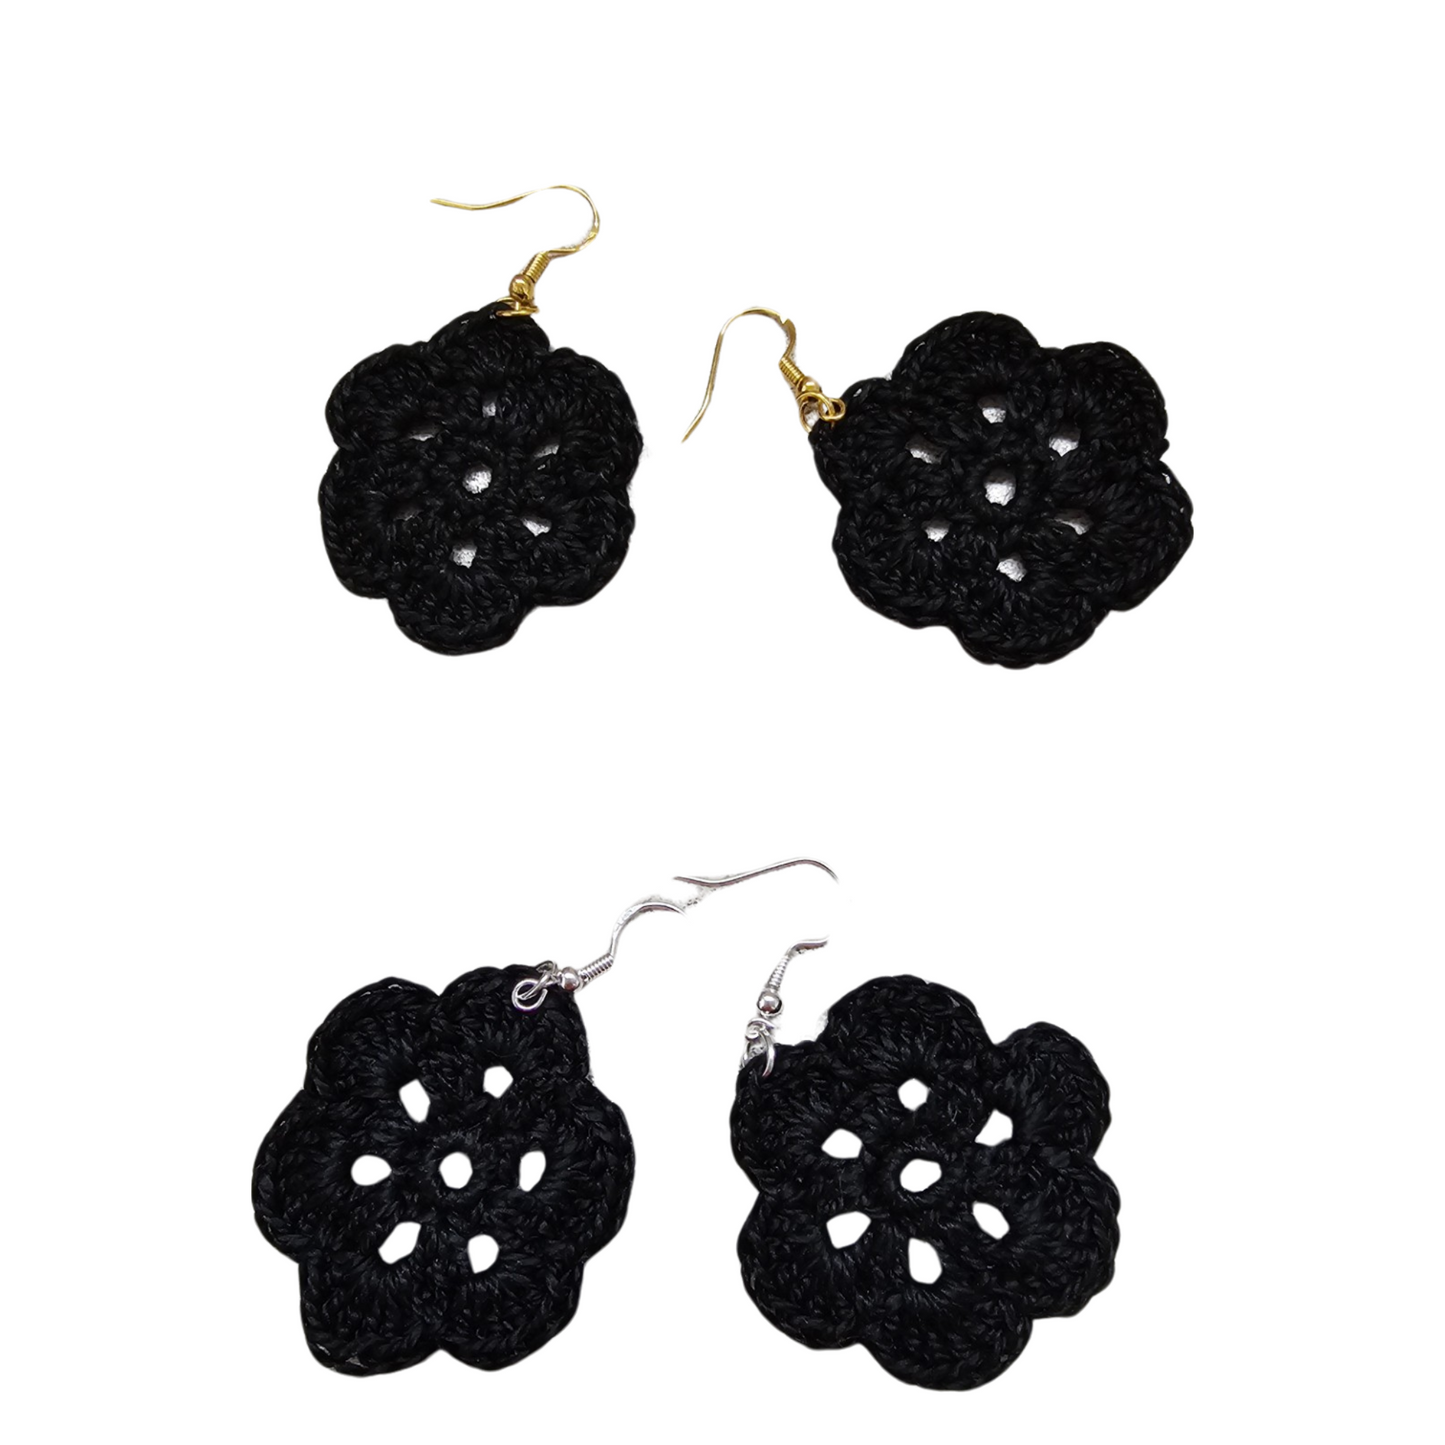 Clementine Black Crochet Earring